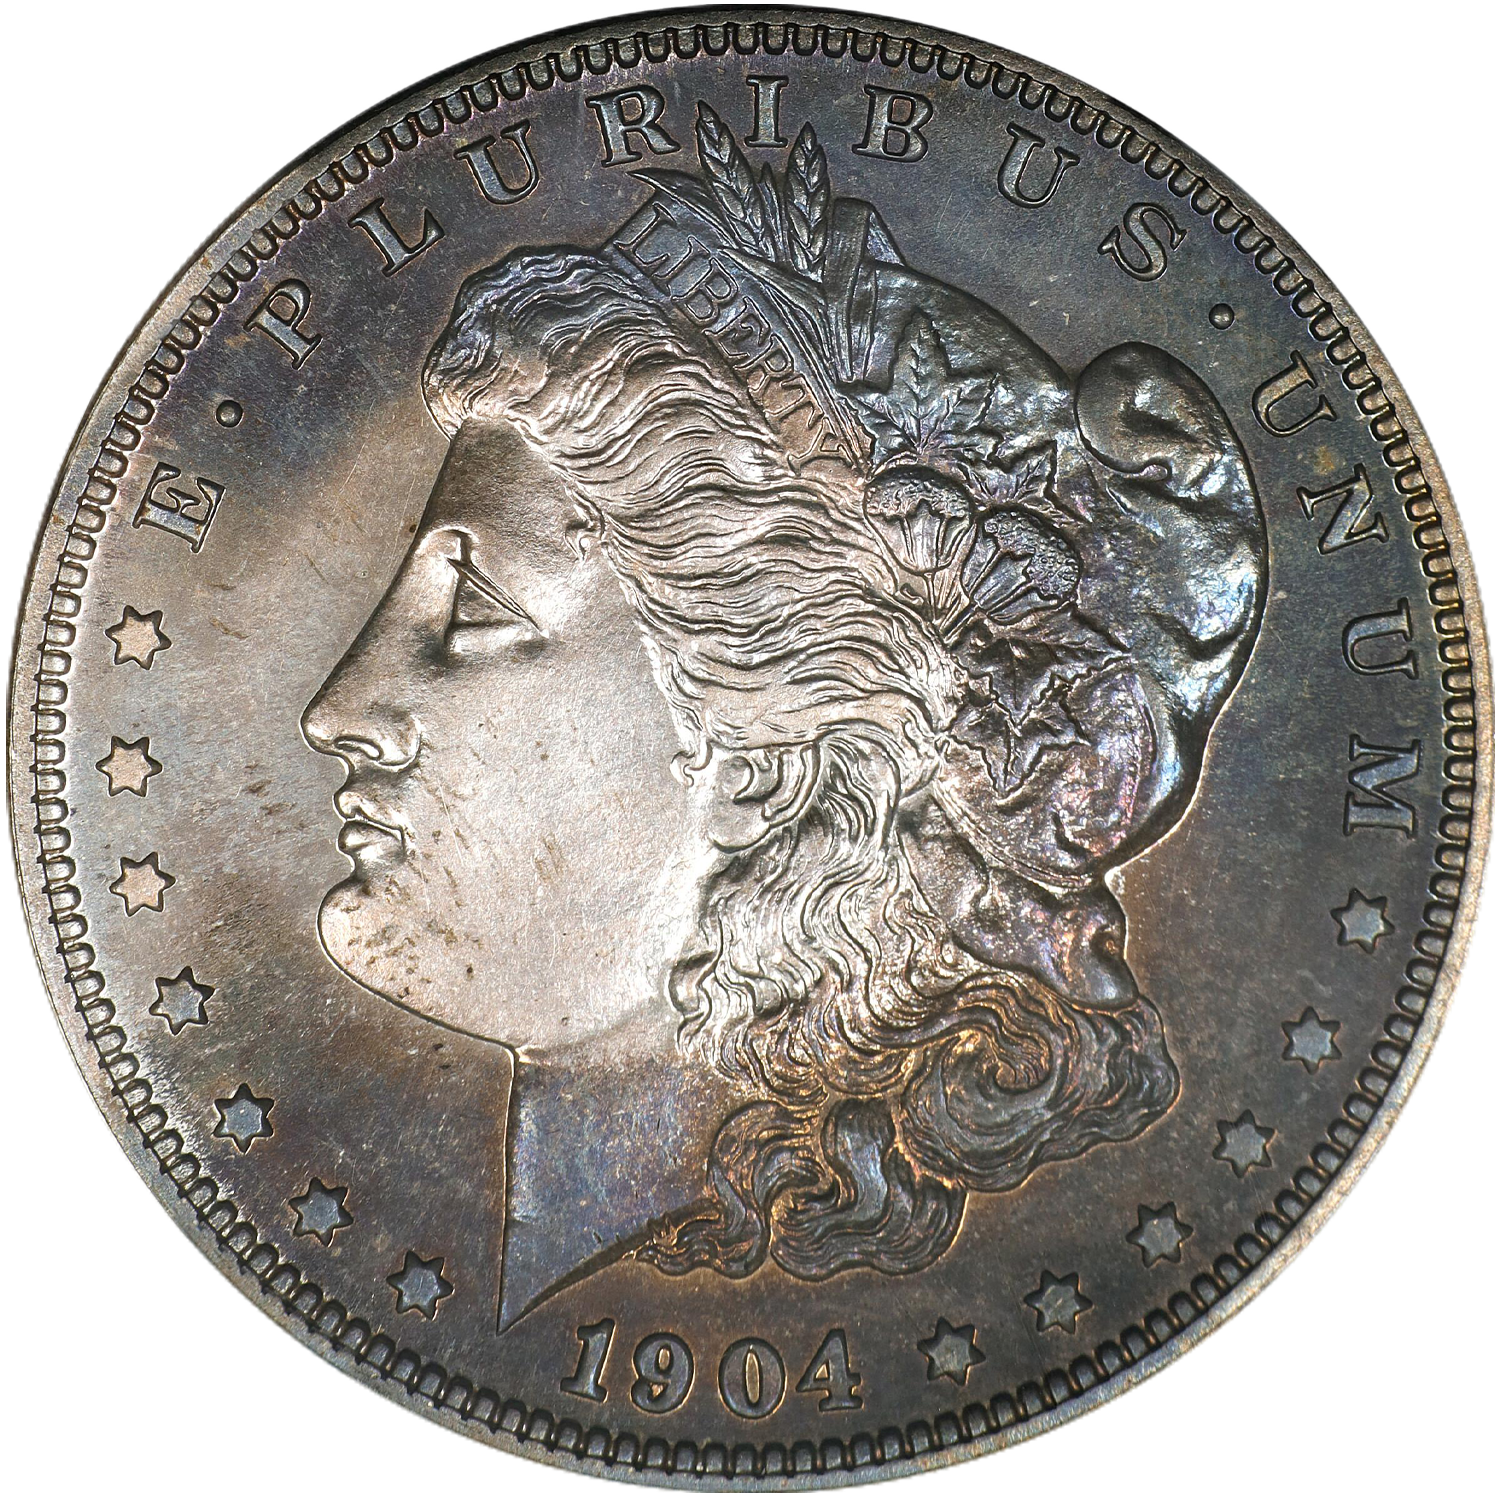 1904 p mint morgan dollar price guide value